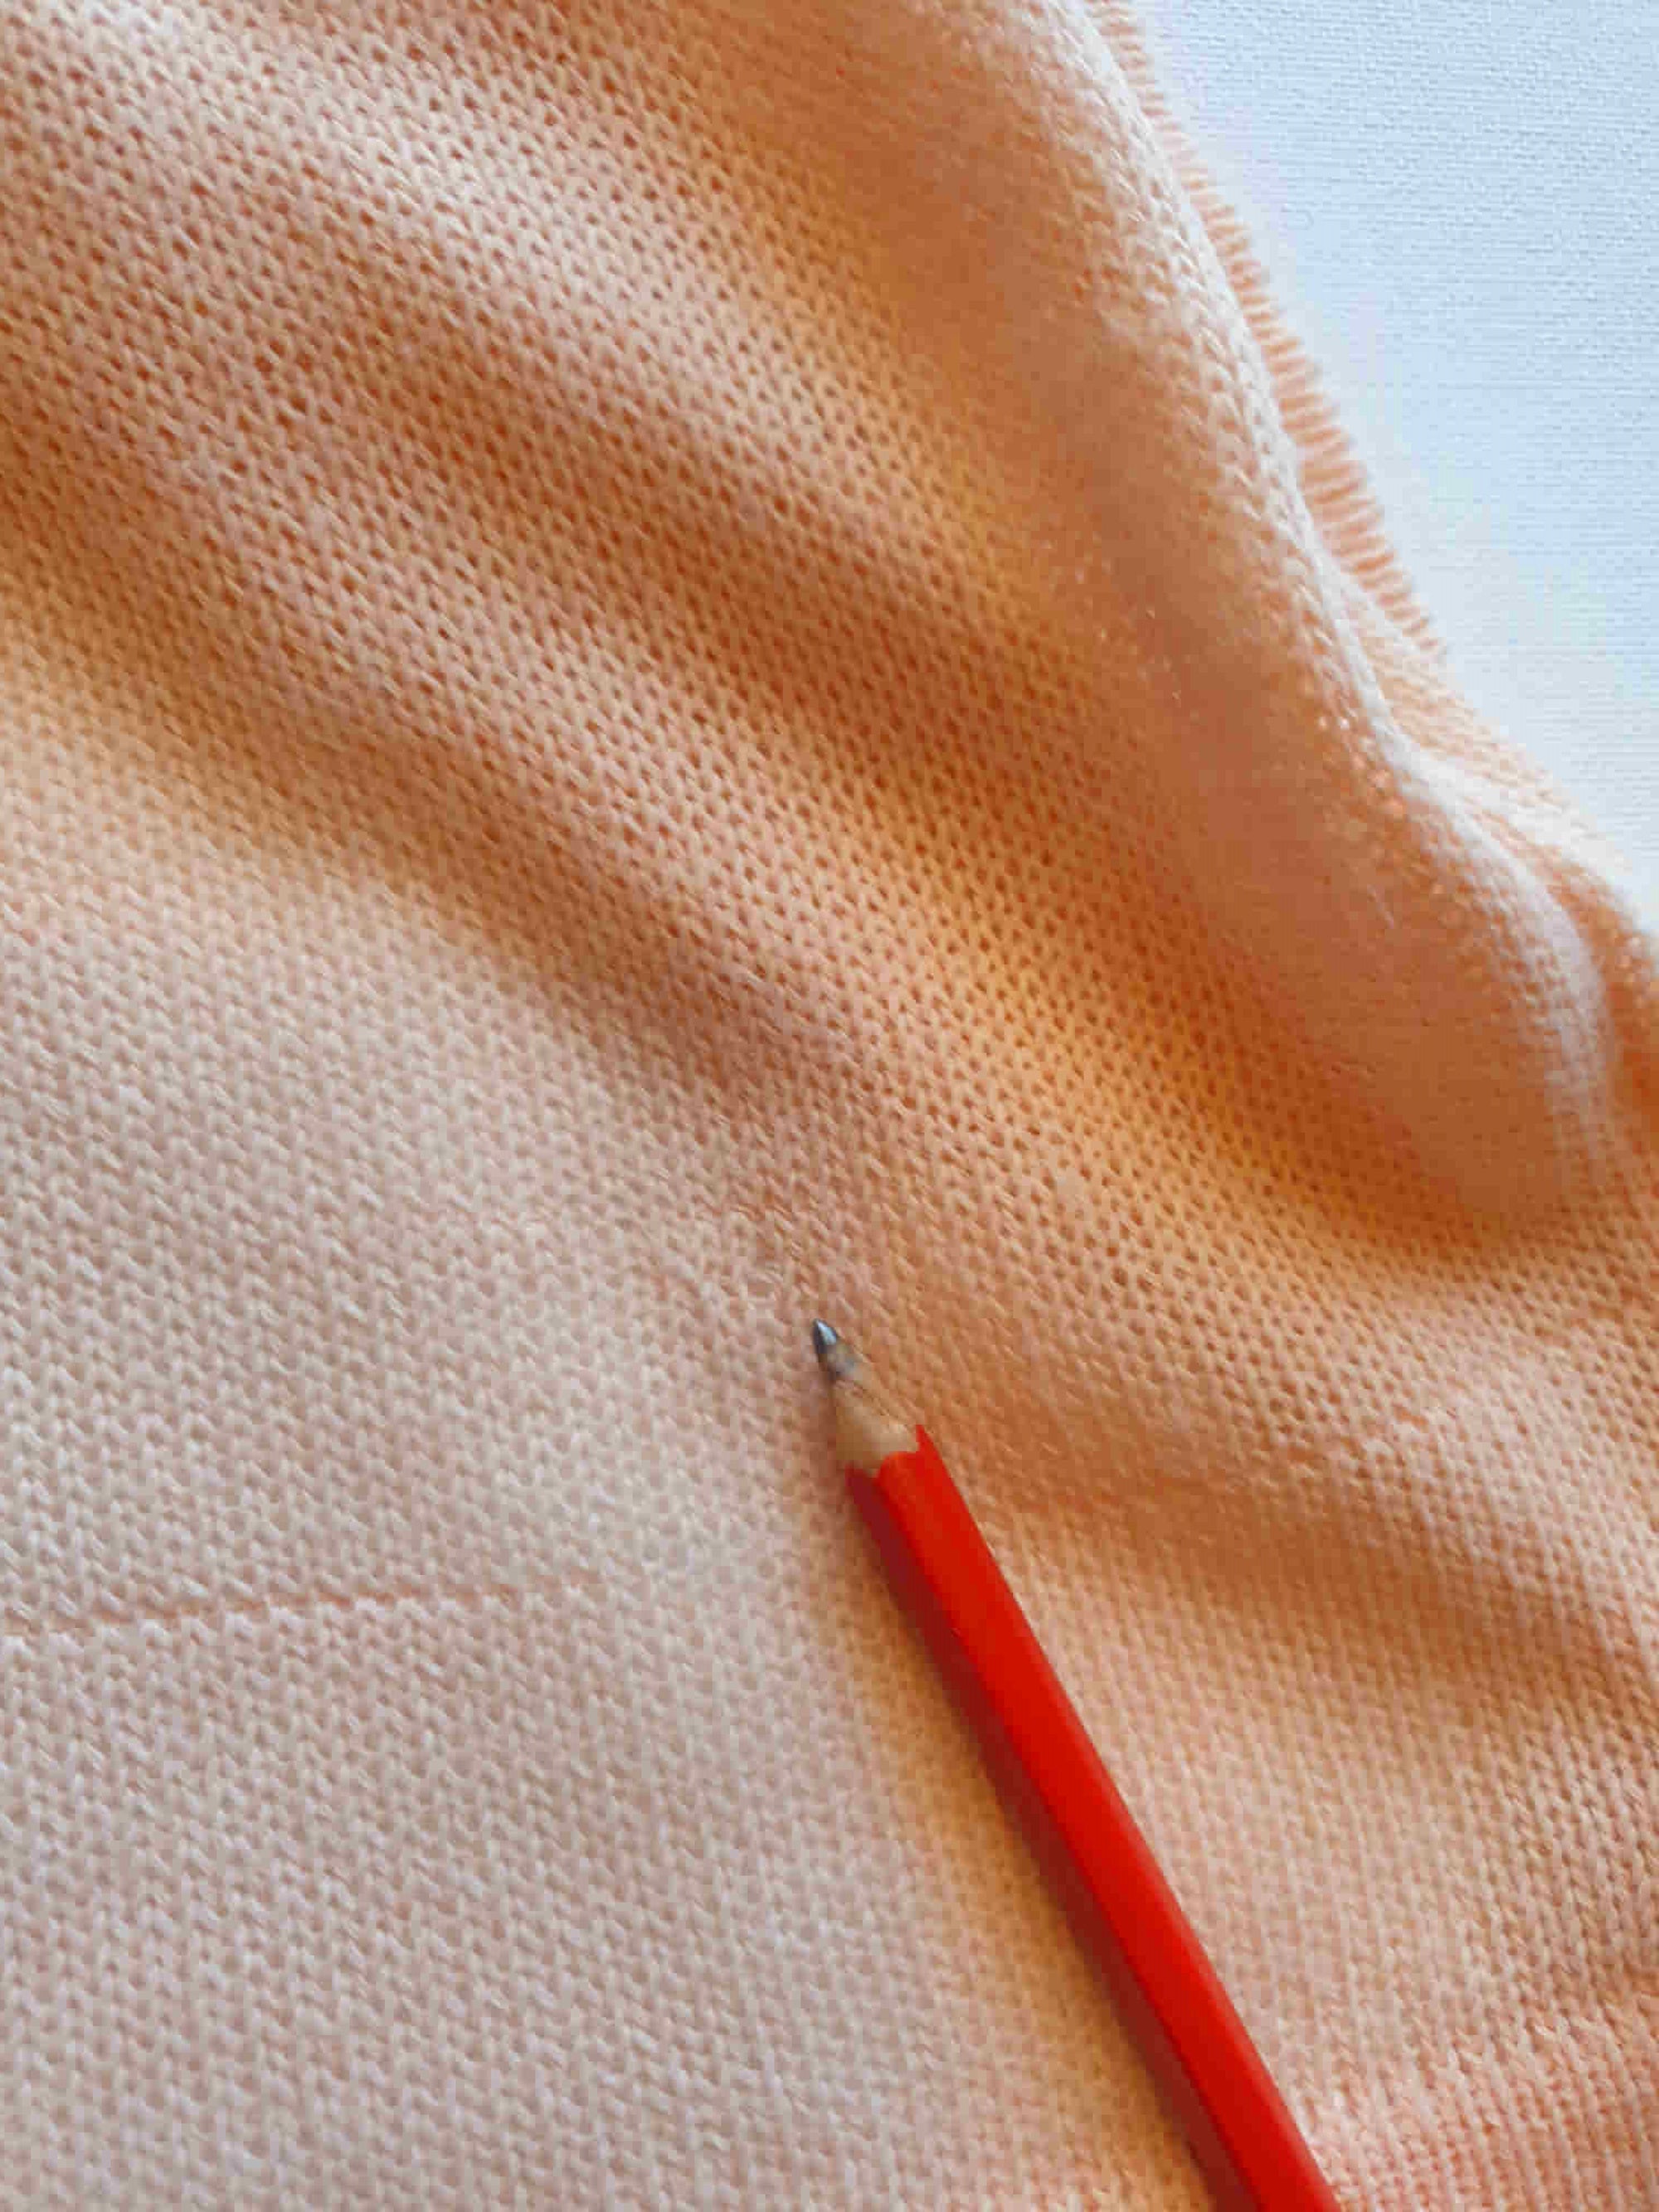 1960s vintage pink lacy knit top short sleeves medium